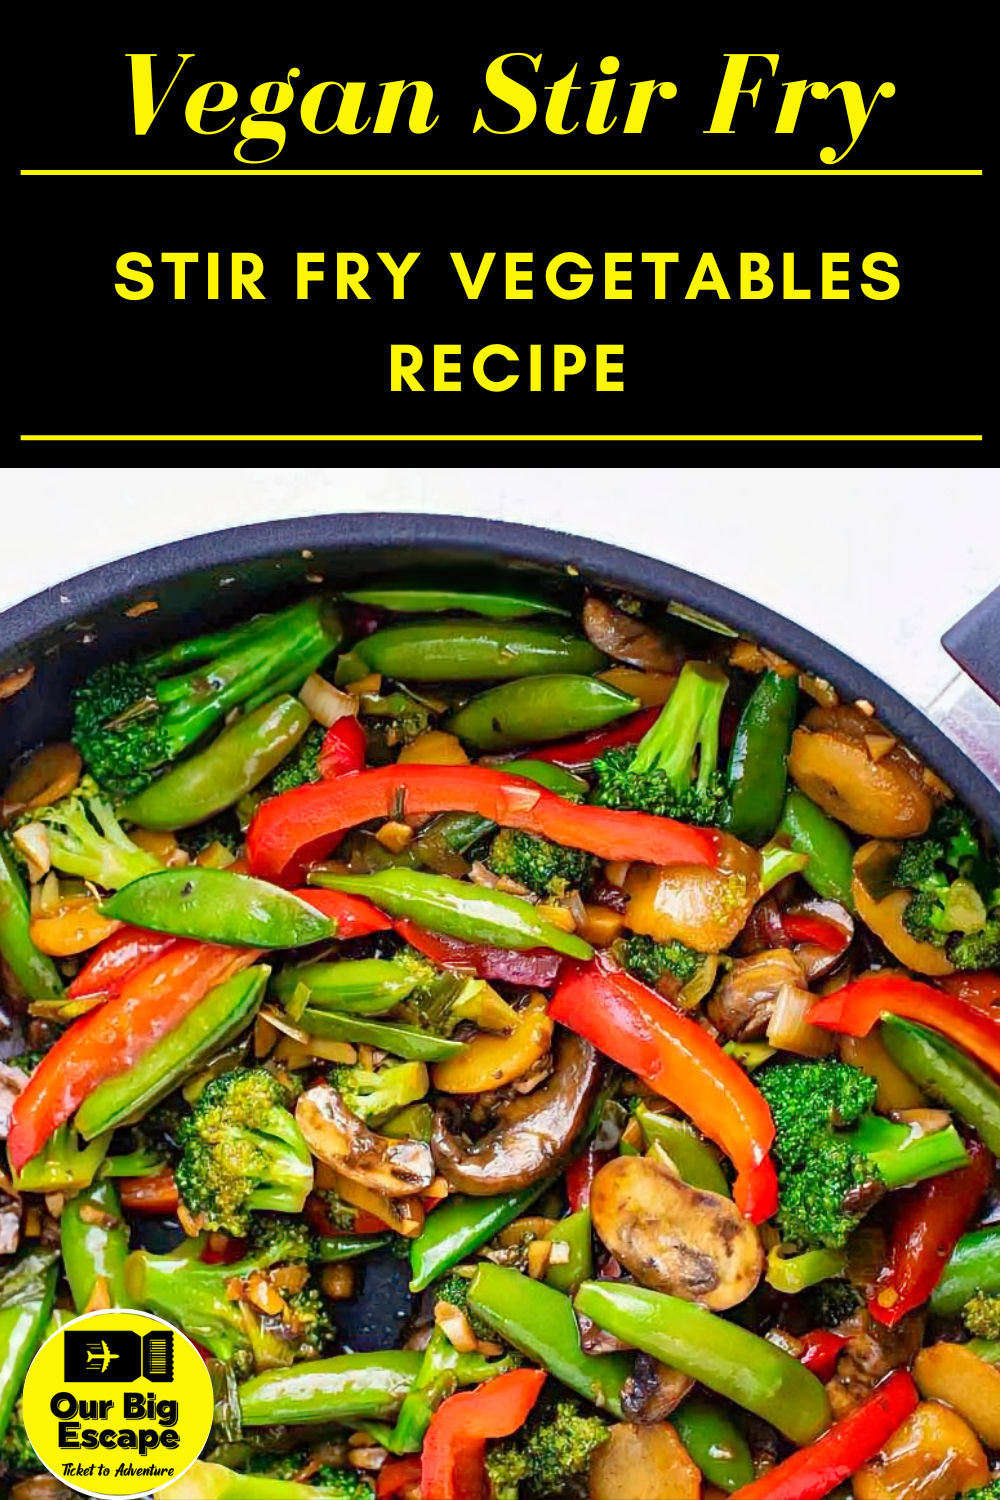 8. Stir Fry Vegetables - Vegan stir fry recipes